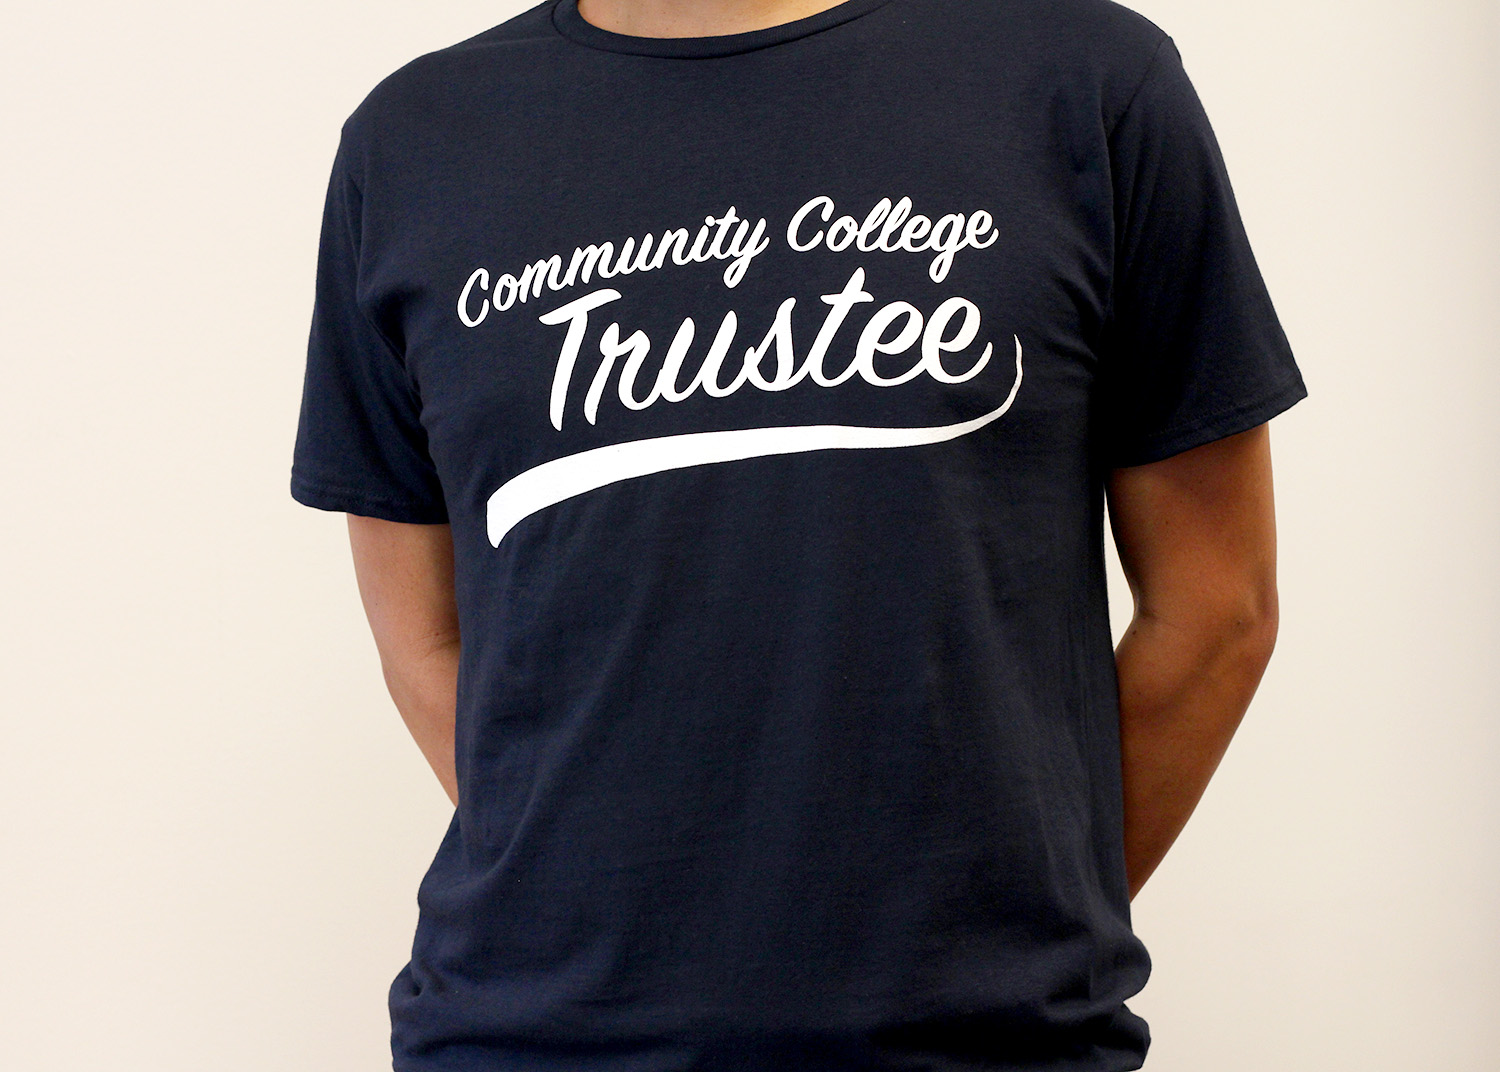 Unisex ACCT Community College Trustee Tee Shirt - Size L